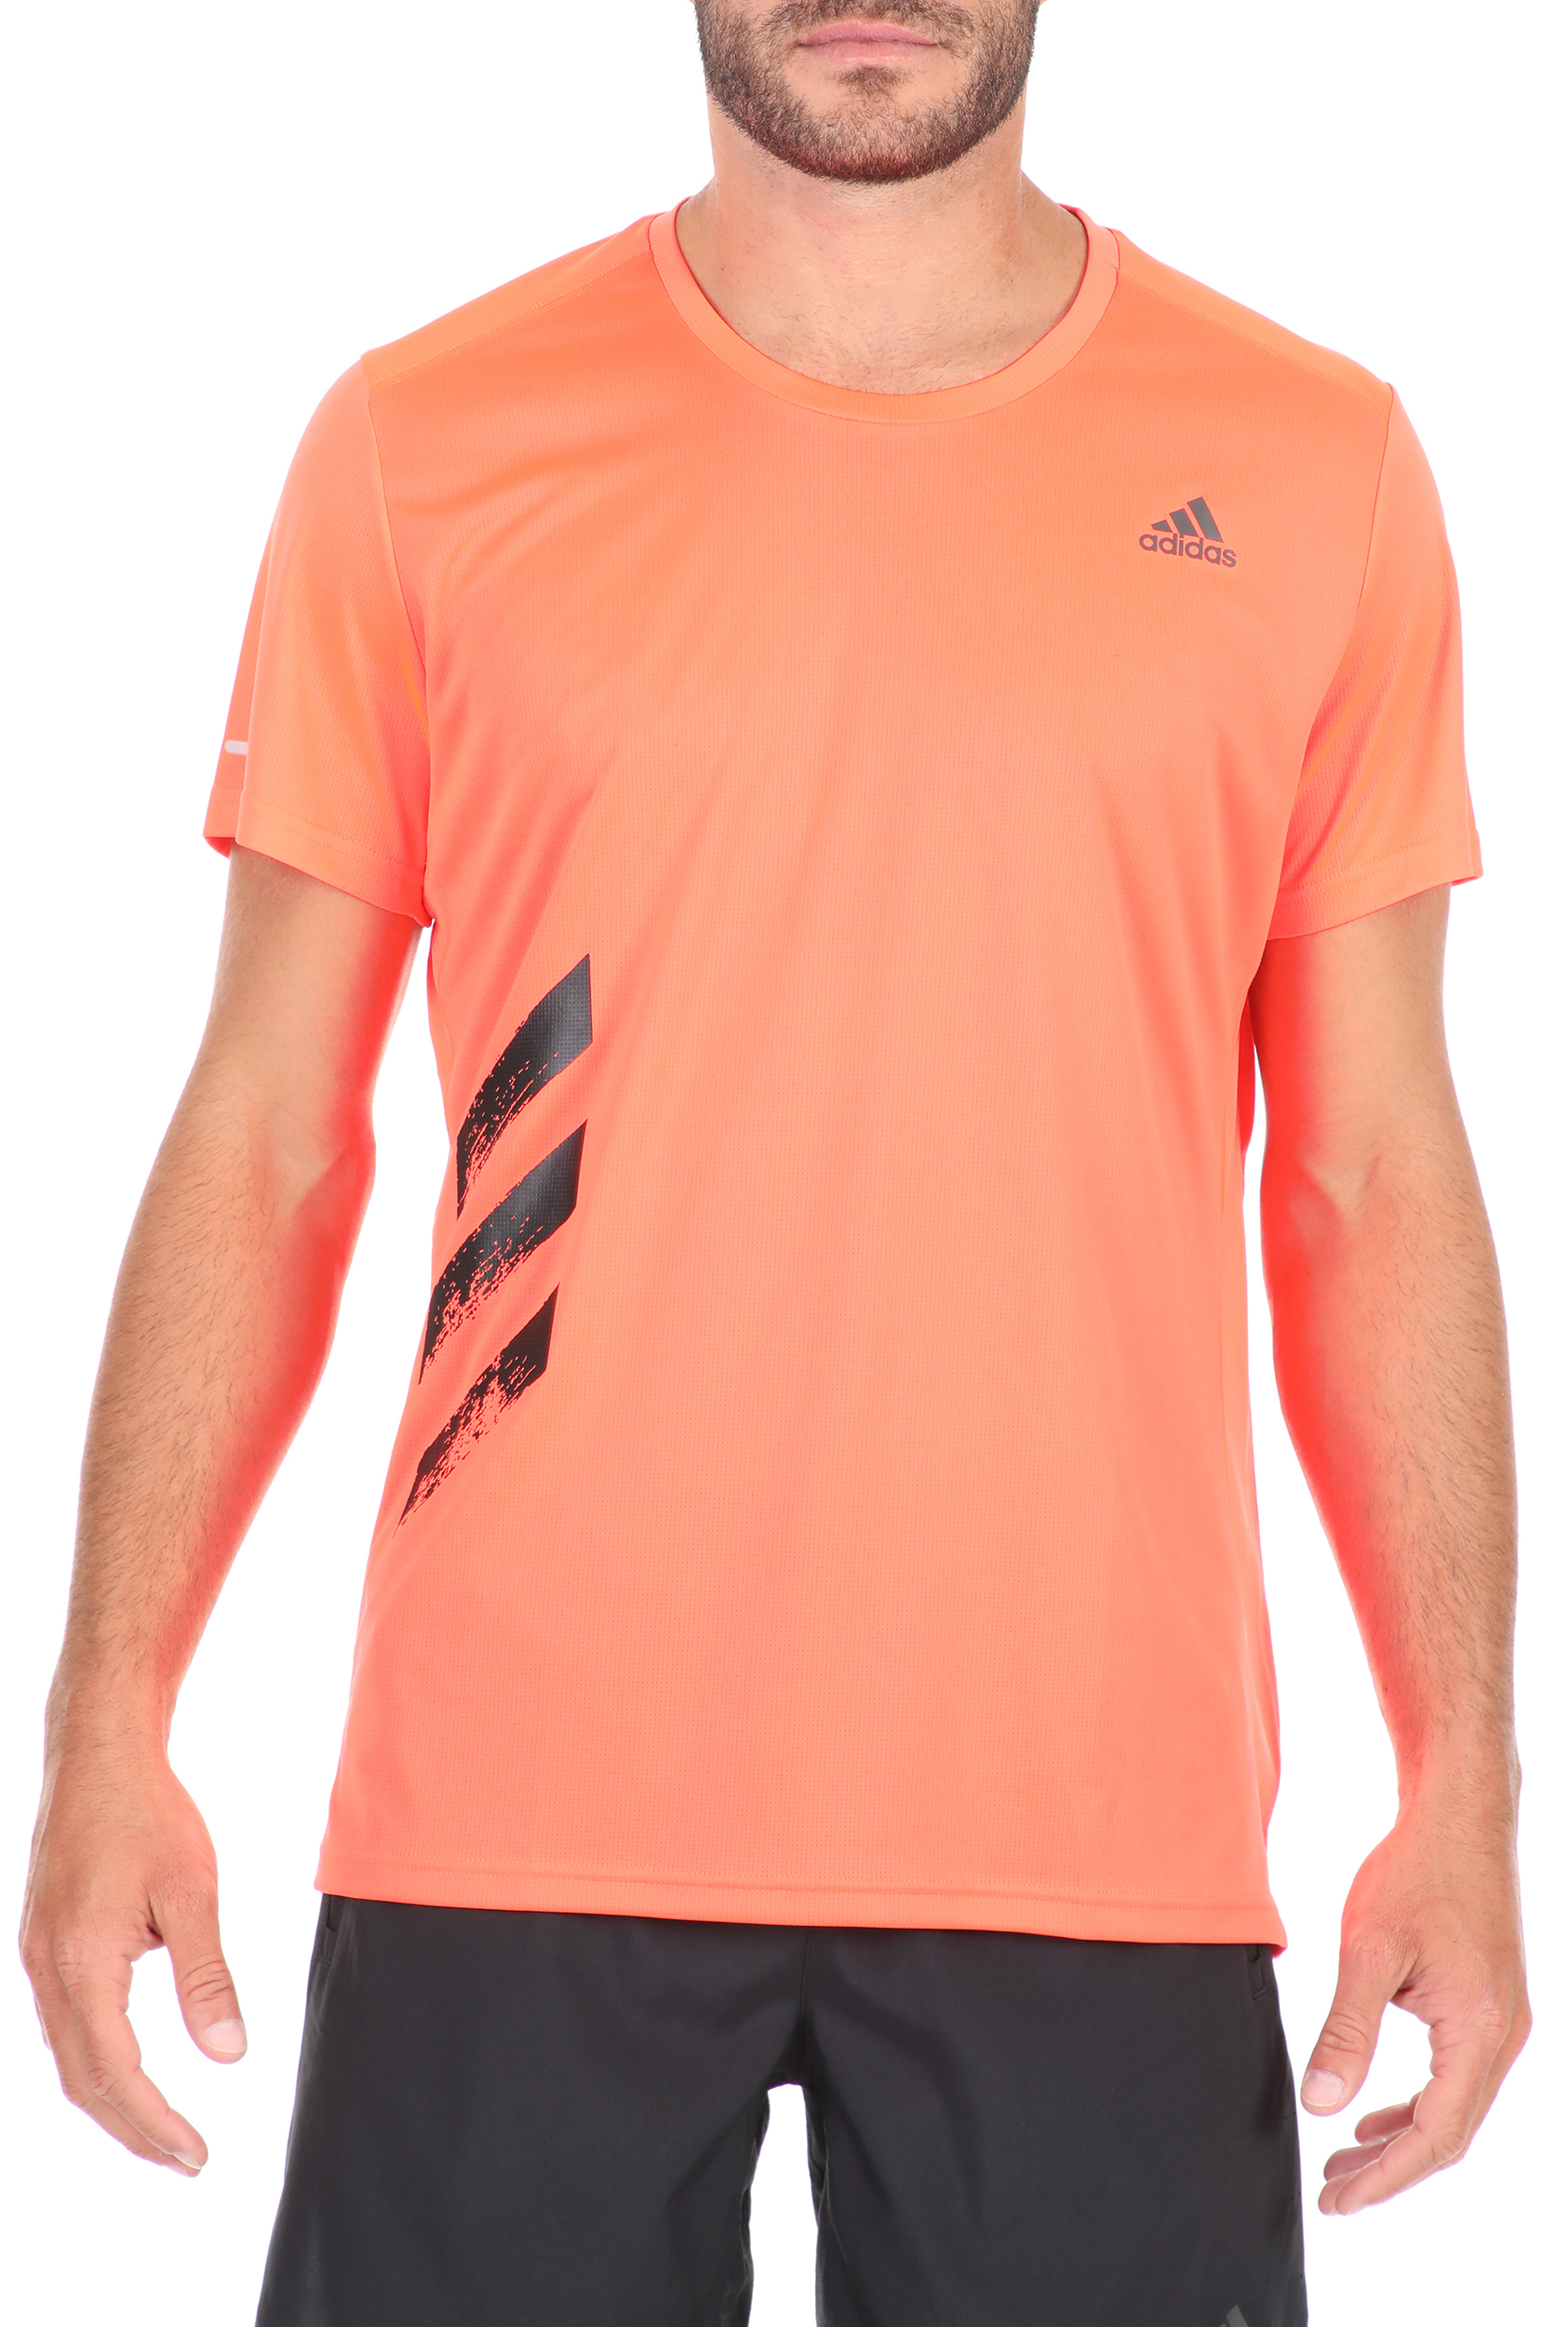 ADIDAS ORIGINALS adidas Performance - Ανδρικό t-shirt adidas Performance RUN IT TEE 3S πορτοκαλί